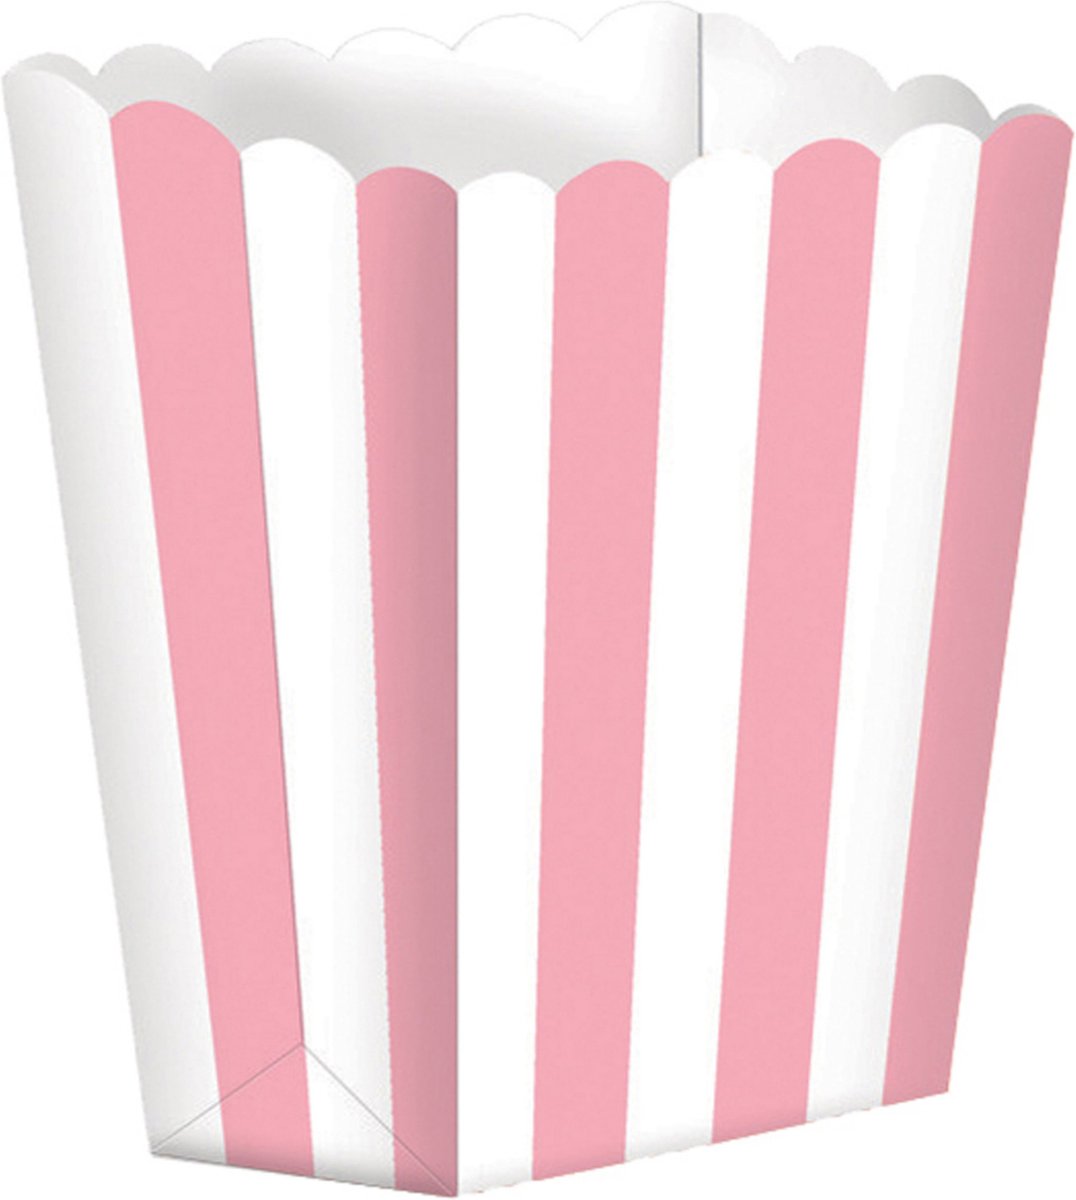 5x stuks Popcorn bakjes licht roze/wit - Popcornbakjes/chipsbakjes/snackbakjes kinderverjaardag/kinderfeestje - Amscan